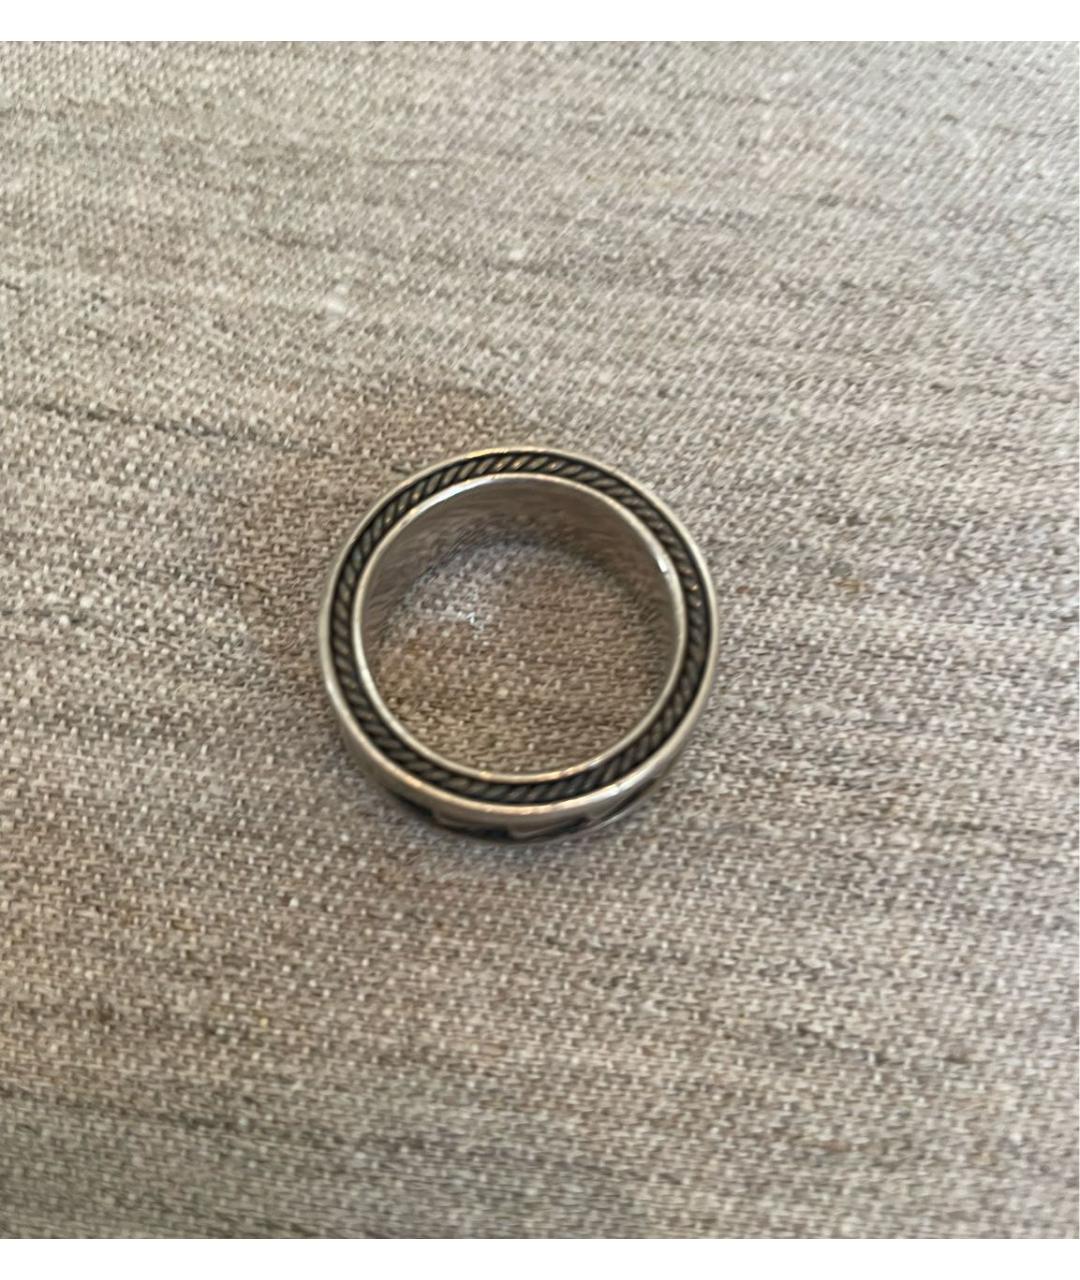 David Yurman Антрацитовое серебряное кольцо, фото 5